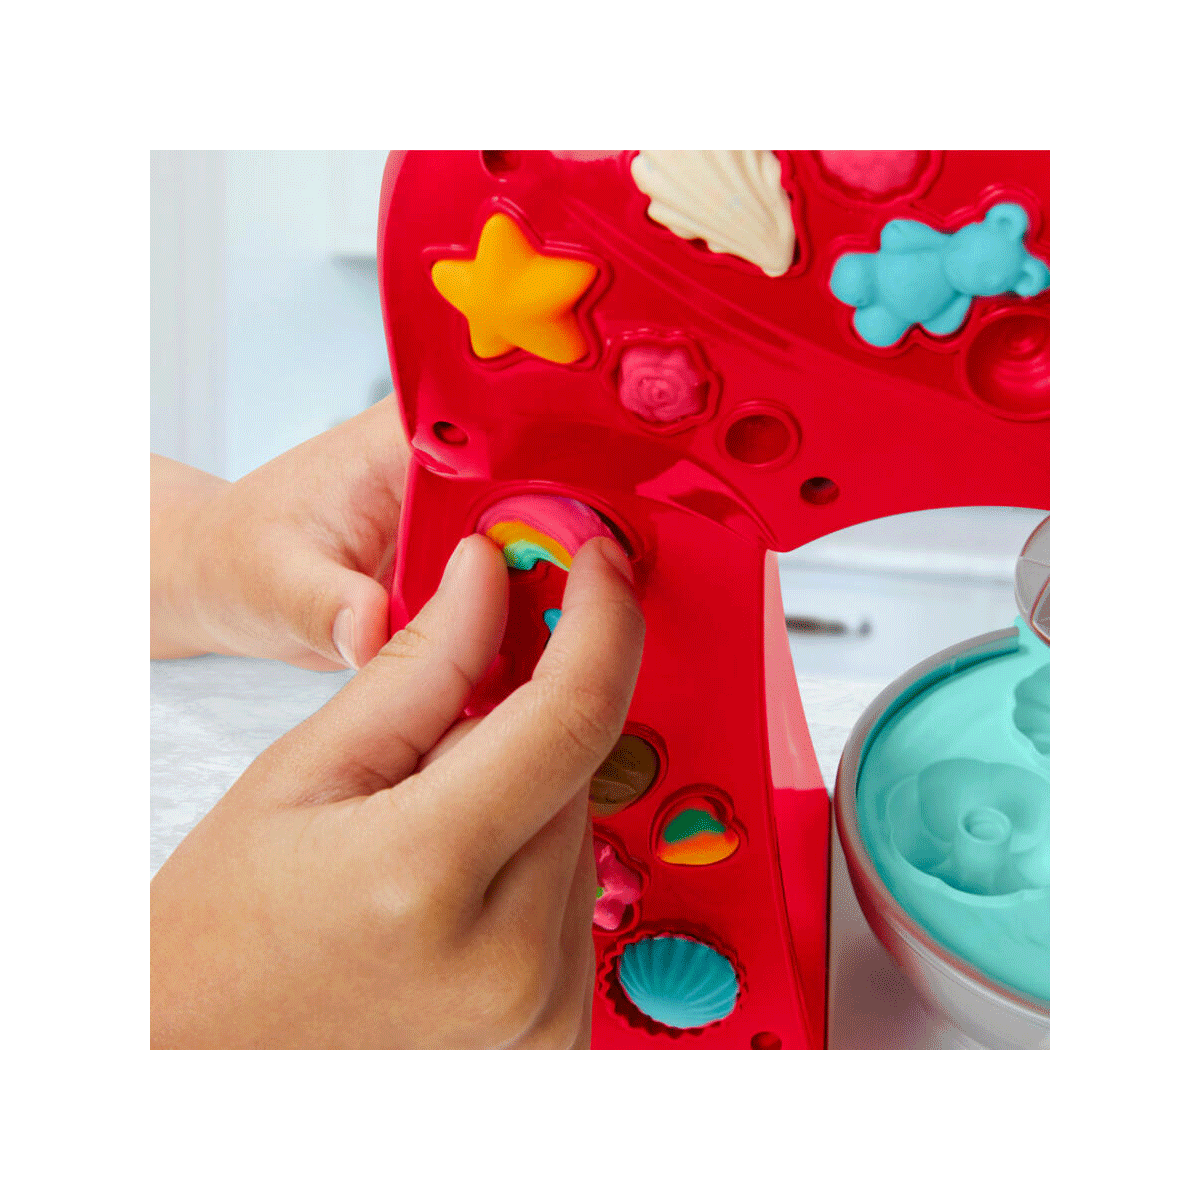 F4718 Play-Doh Sihirli Mikser Oyun Seti